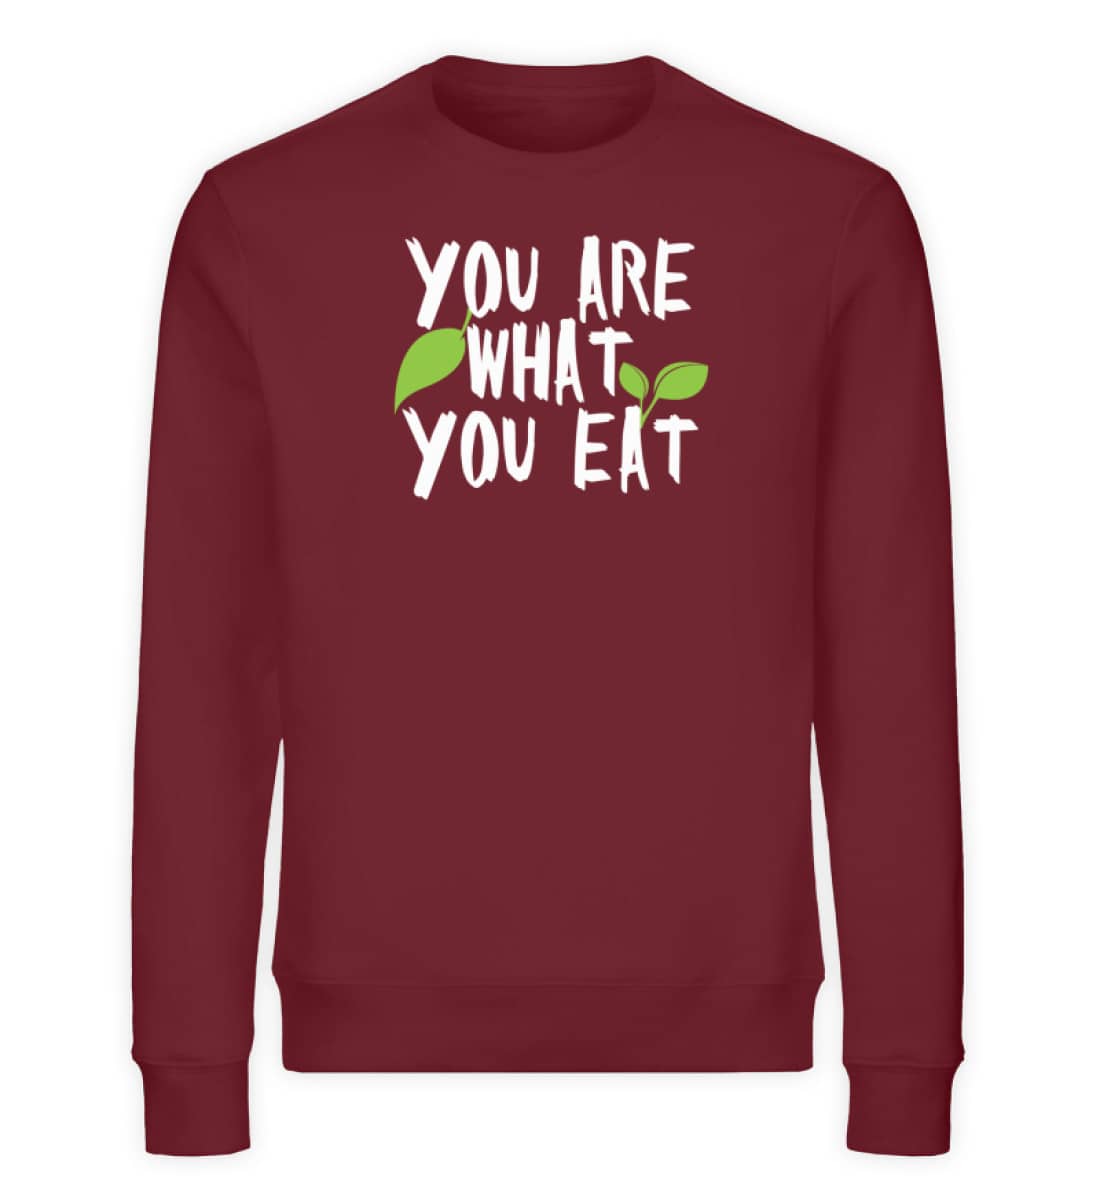 You Are What You Eat - Unisex Organic Sweatshirt-6883